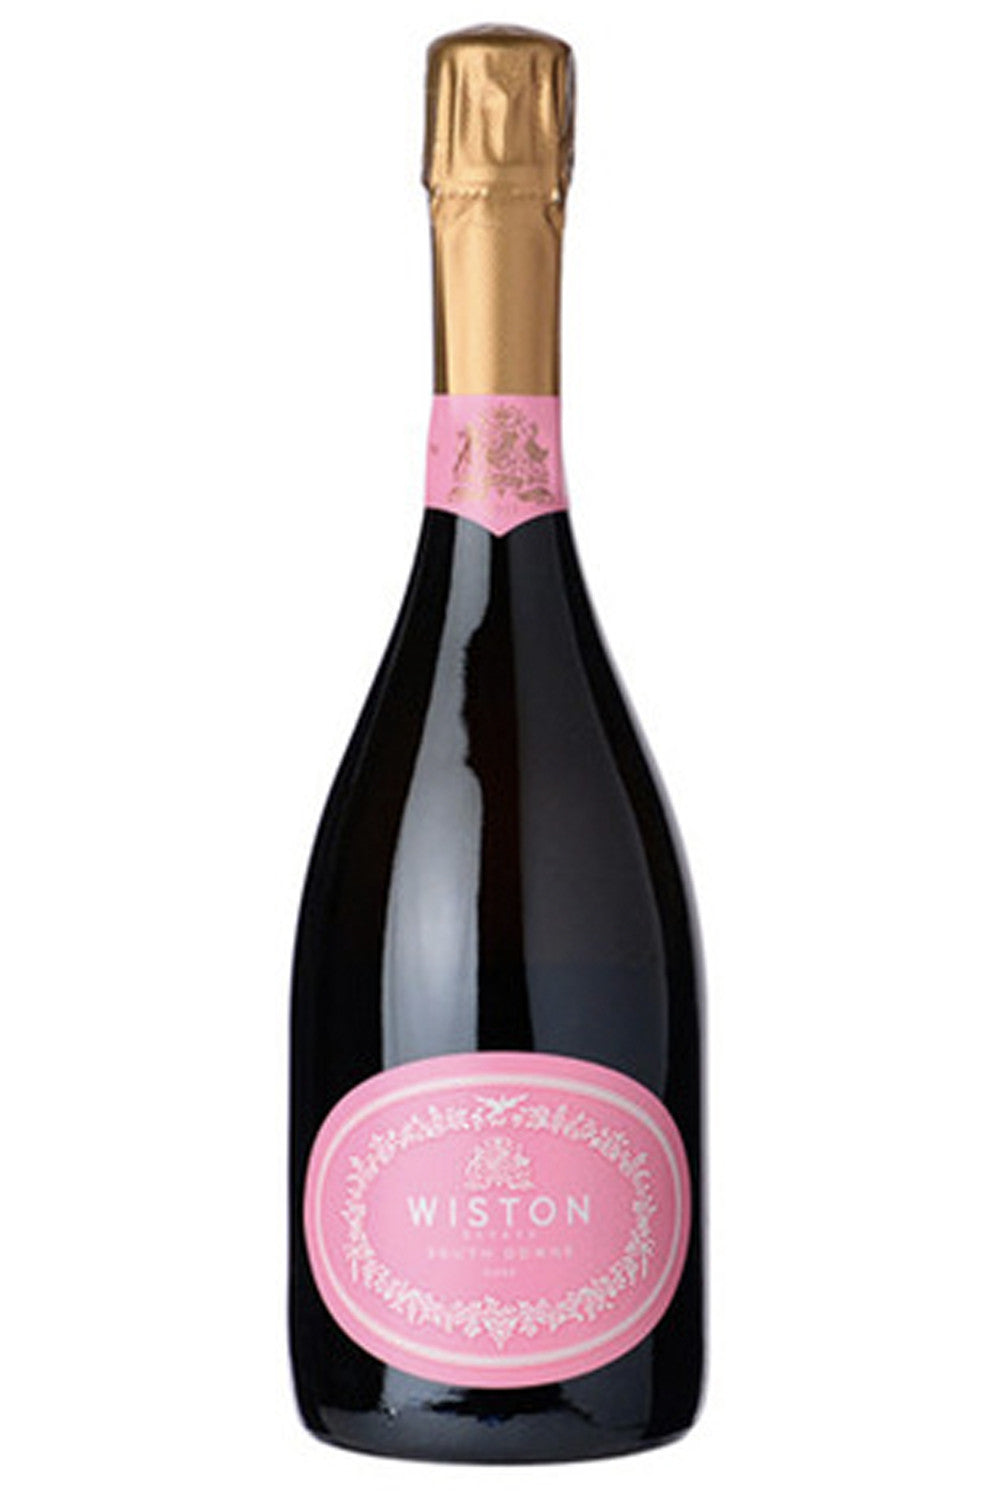 Wiston Estate Rosé 2014 - Hawkins Bros. Fine English Wines